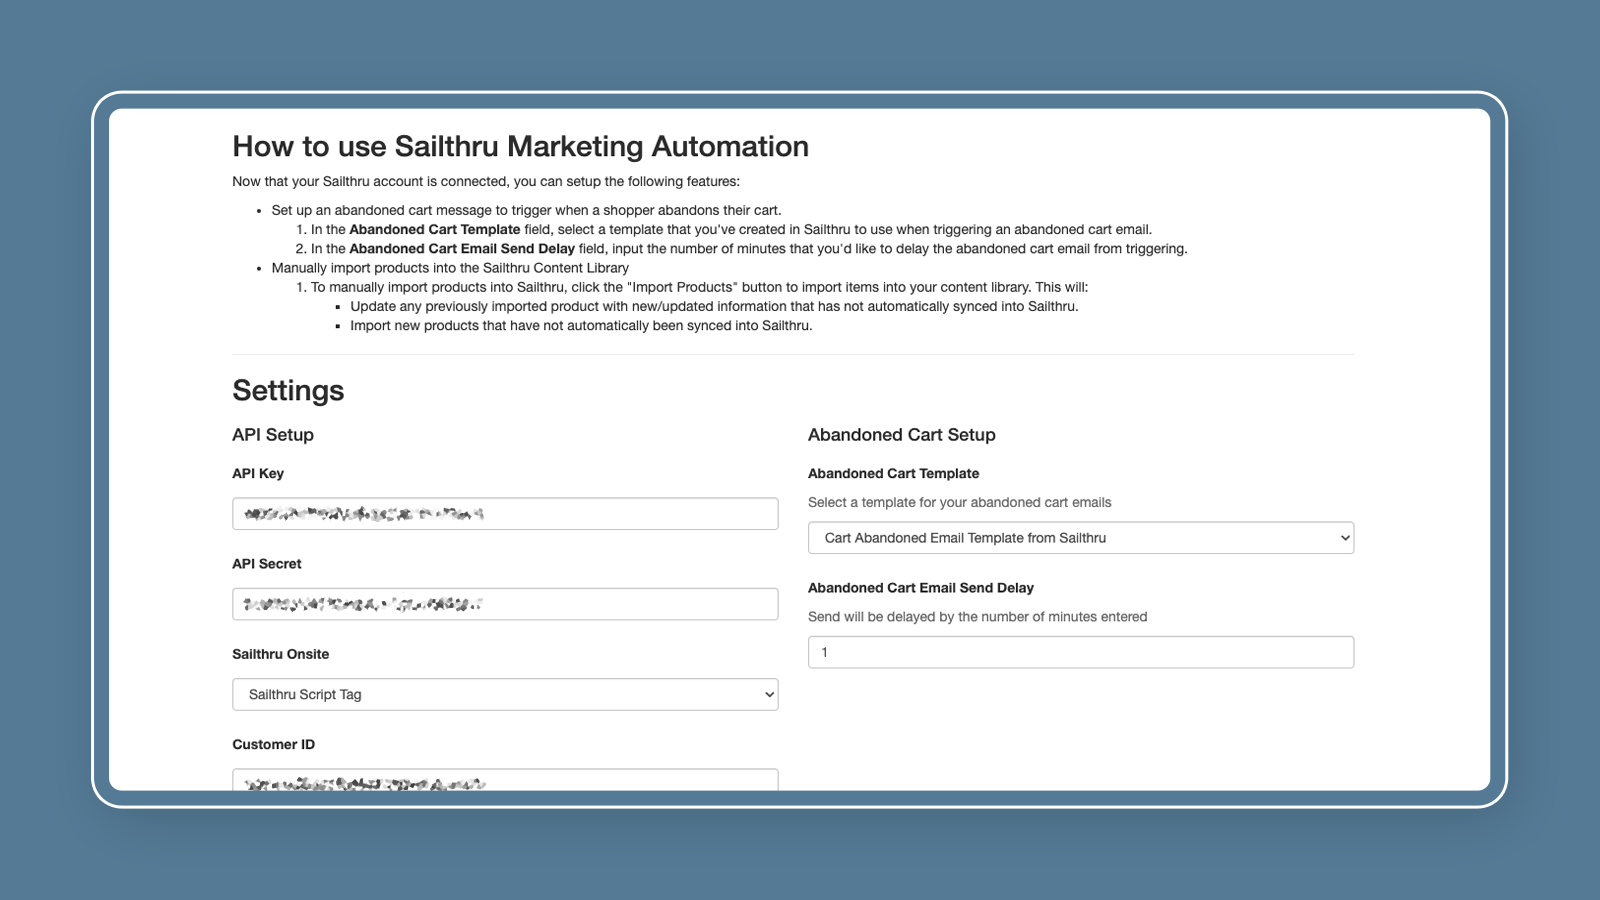 Sailthru Marketing Automation app screenshot.